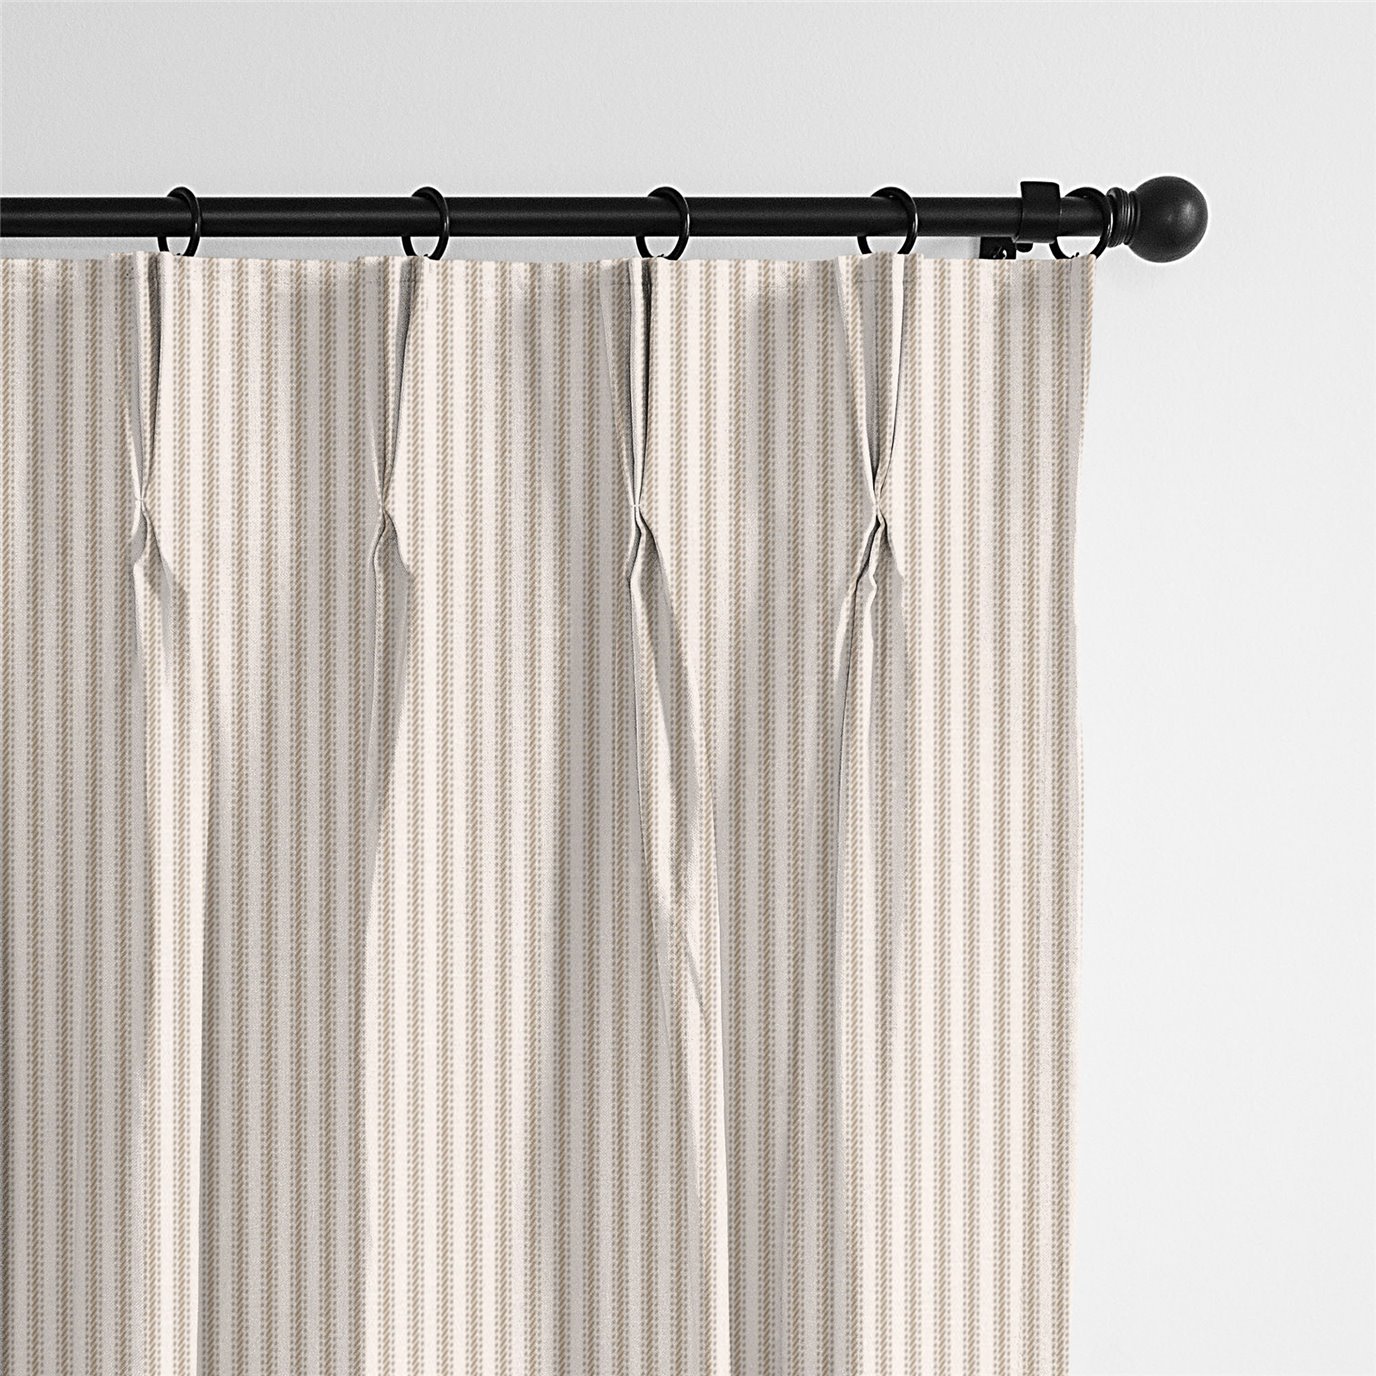 Cruz Ticking Stripes Taupe/Ivory Pinch Pleat Drapery Panel - Pair - Size 20"x132"